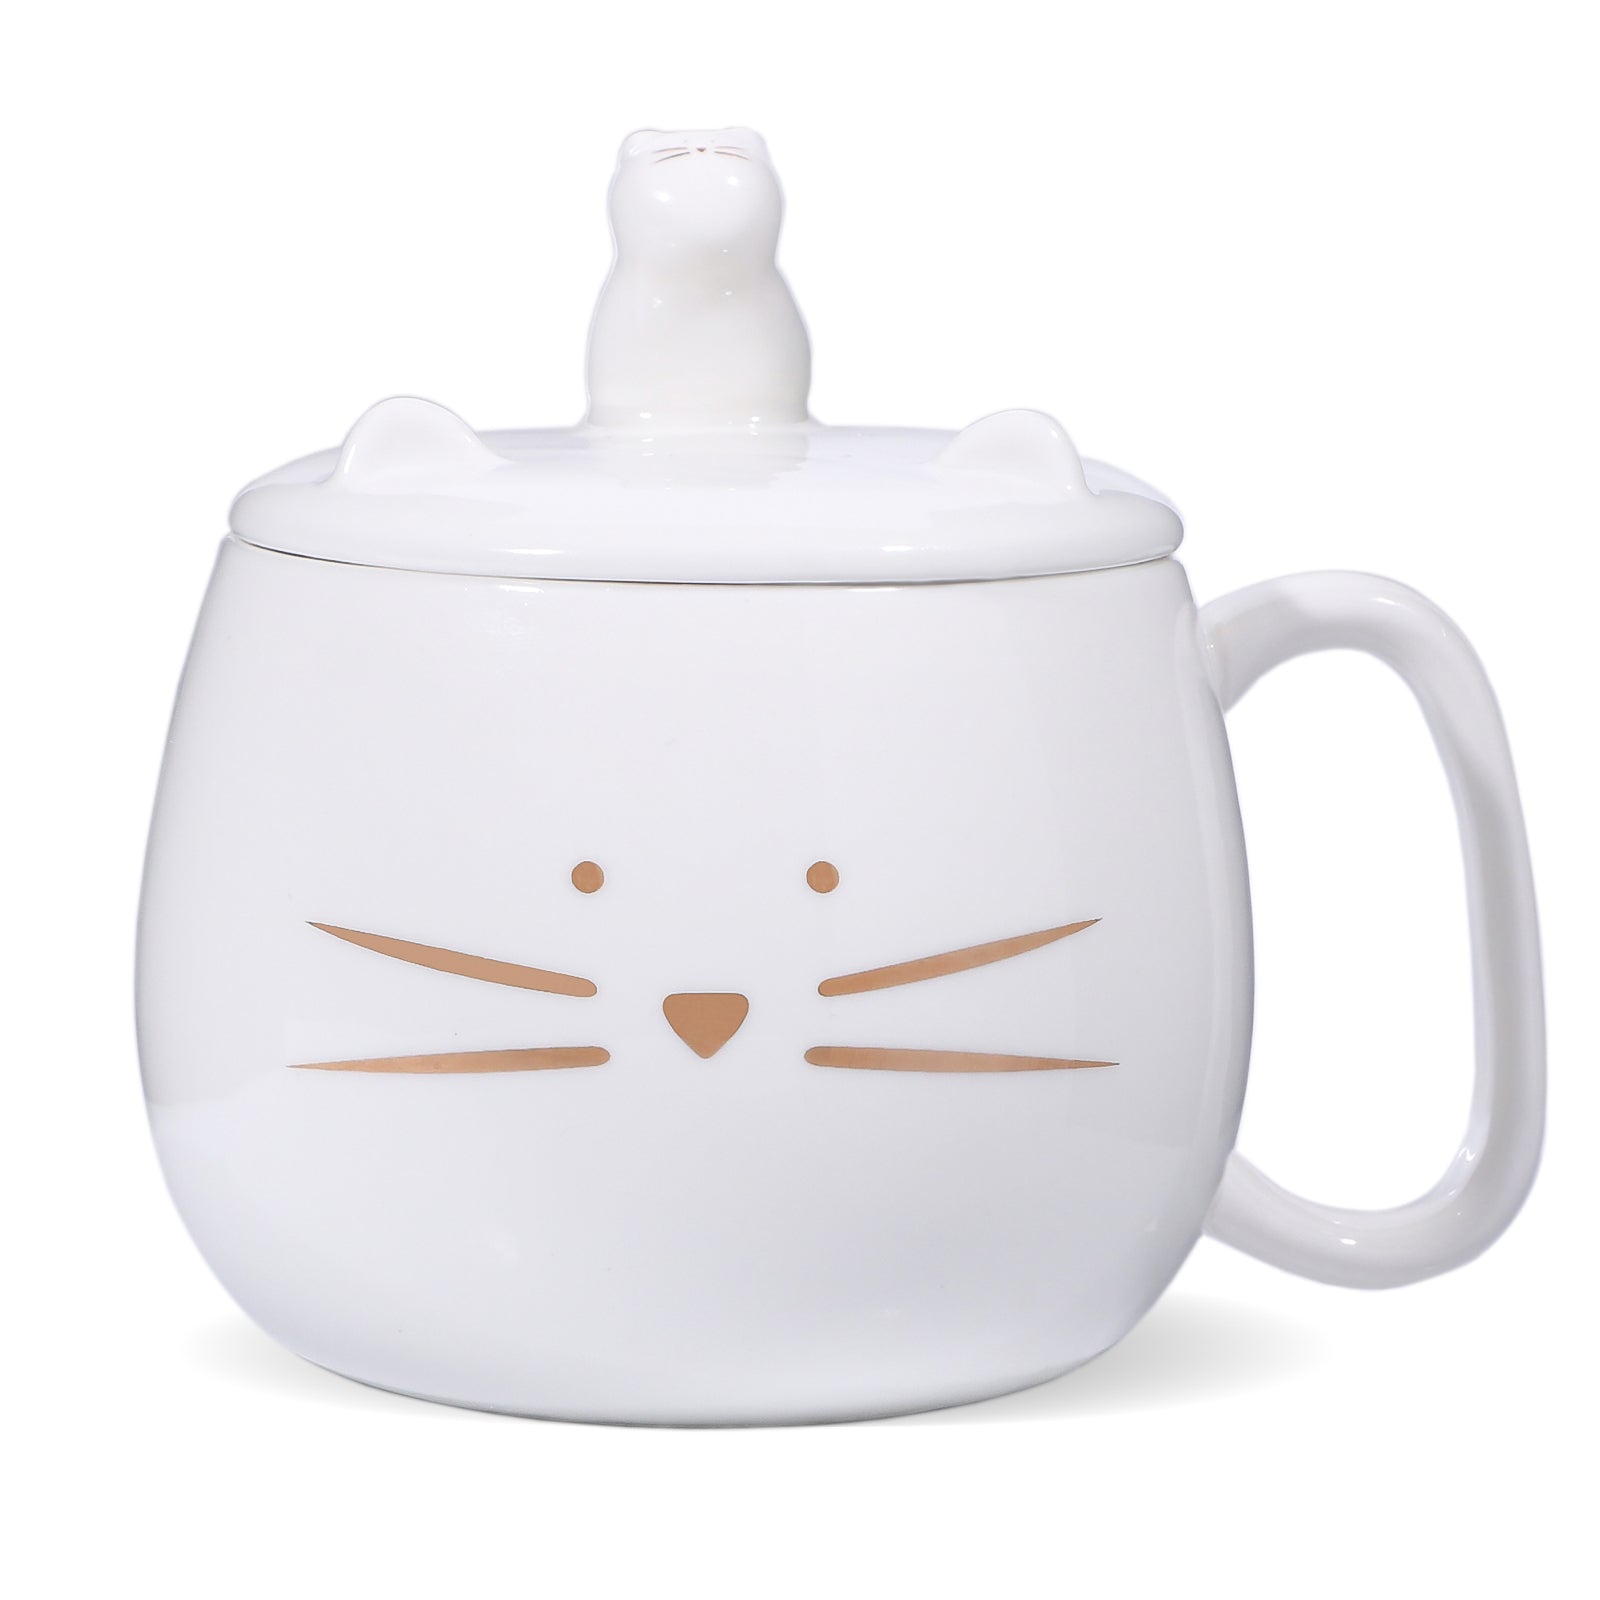 Koolkatkoo 16OZ Cute Cat Coffee Mug with Cell Phone Holder Lid for Cat